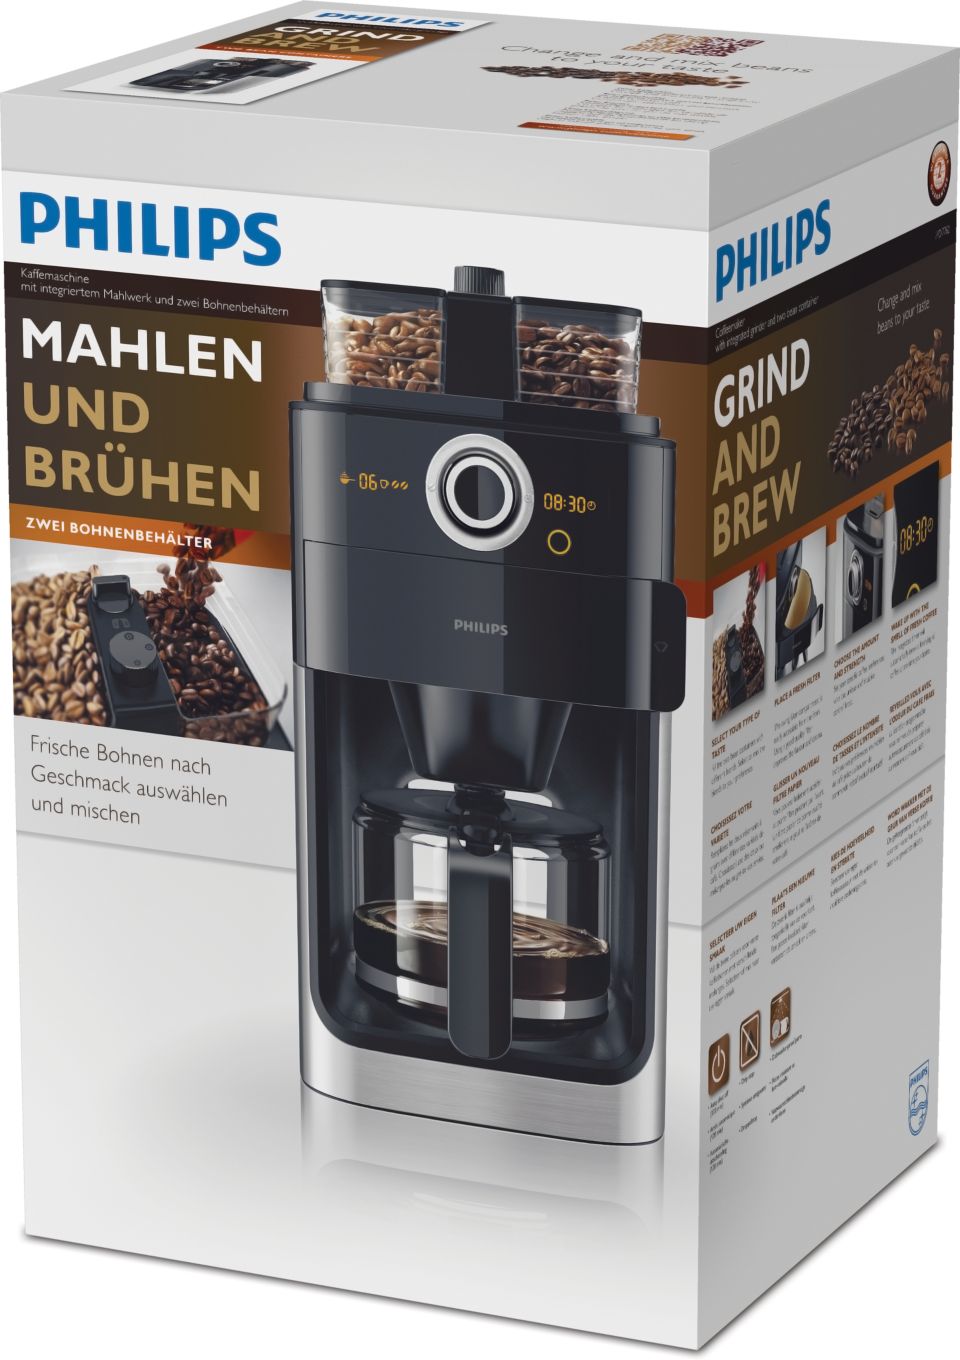 & Brew Coffee maker HD7762/00 | Philips